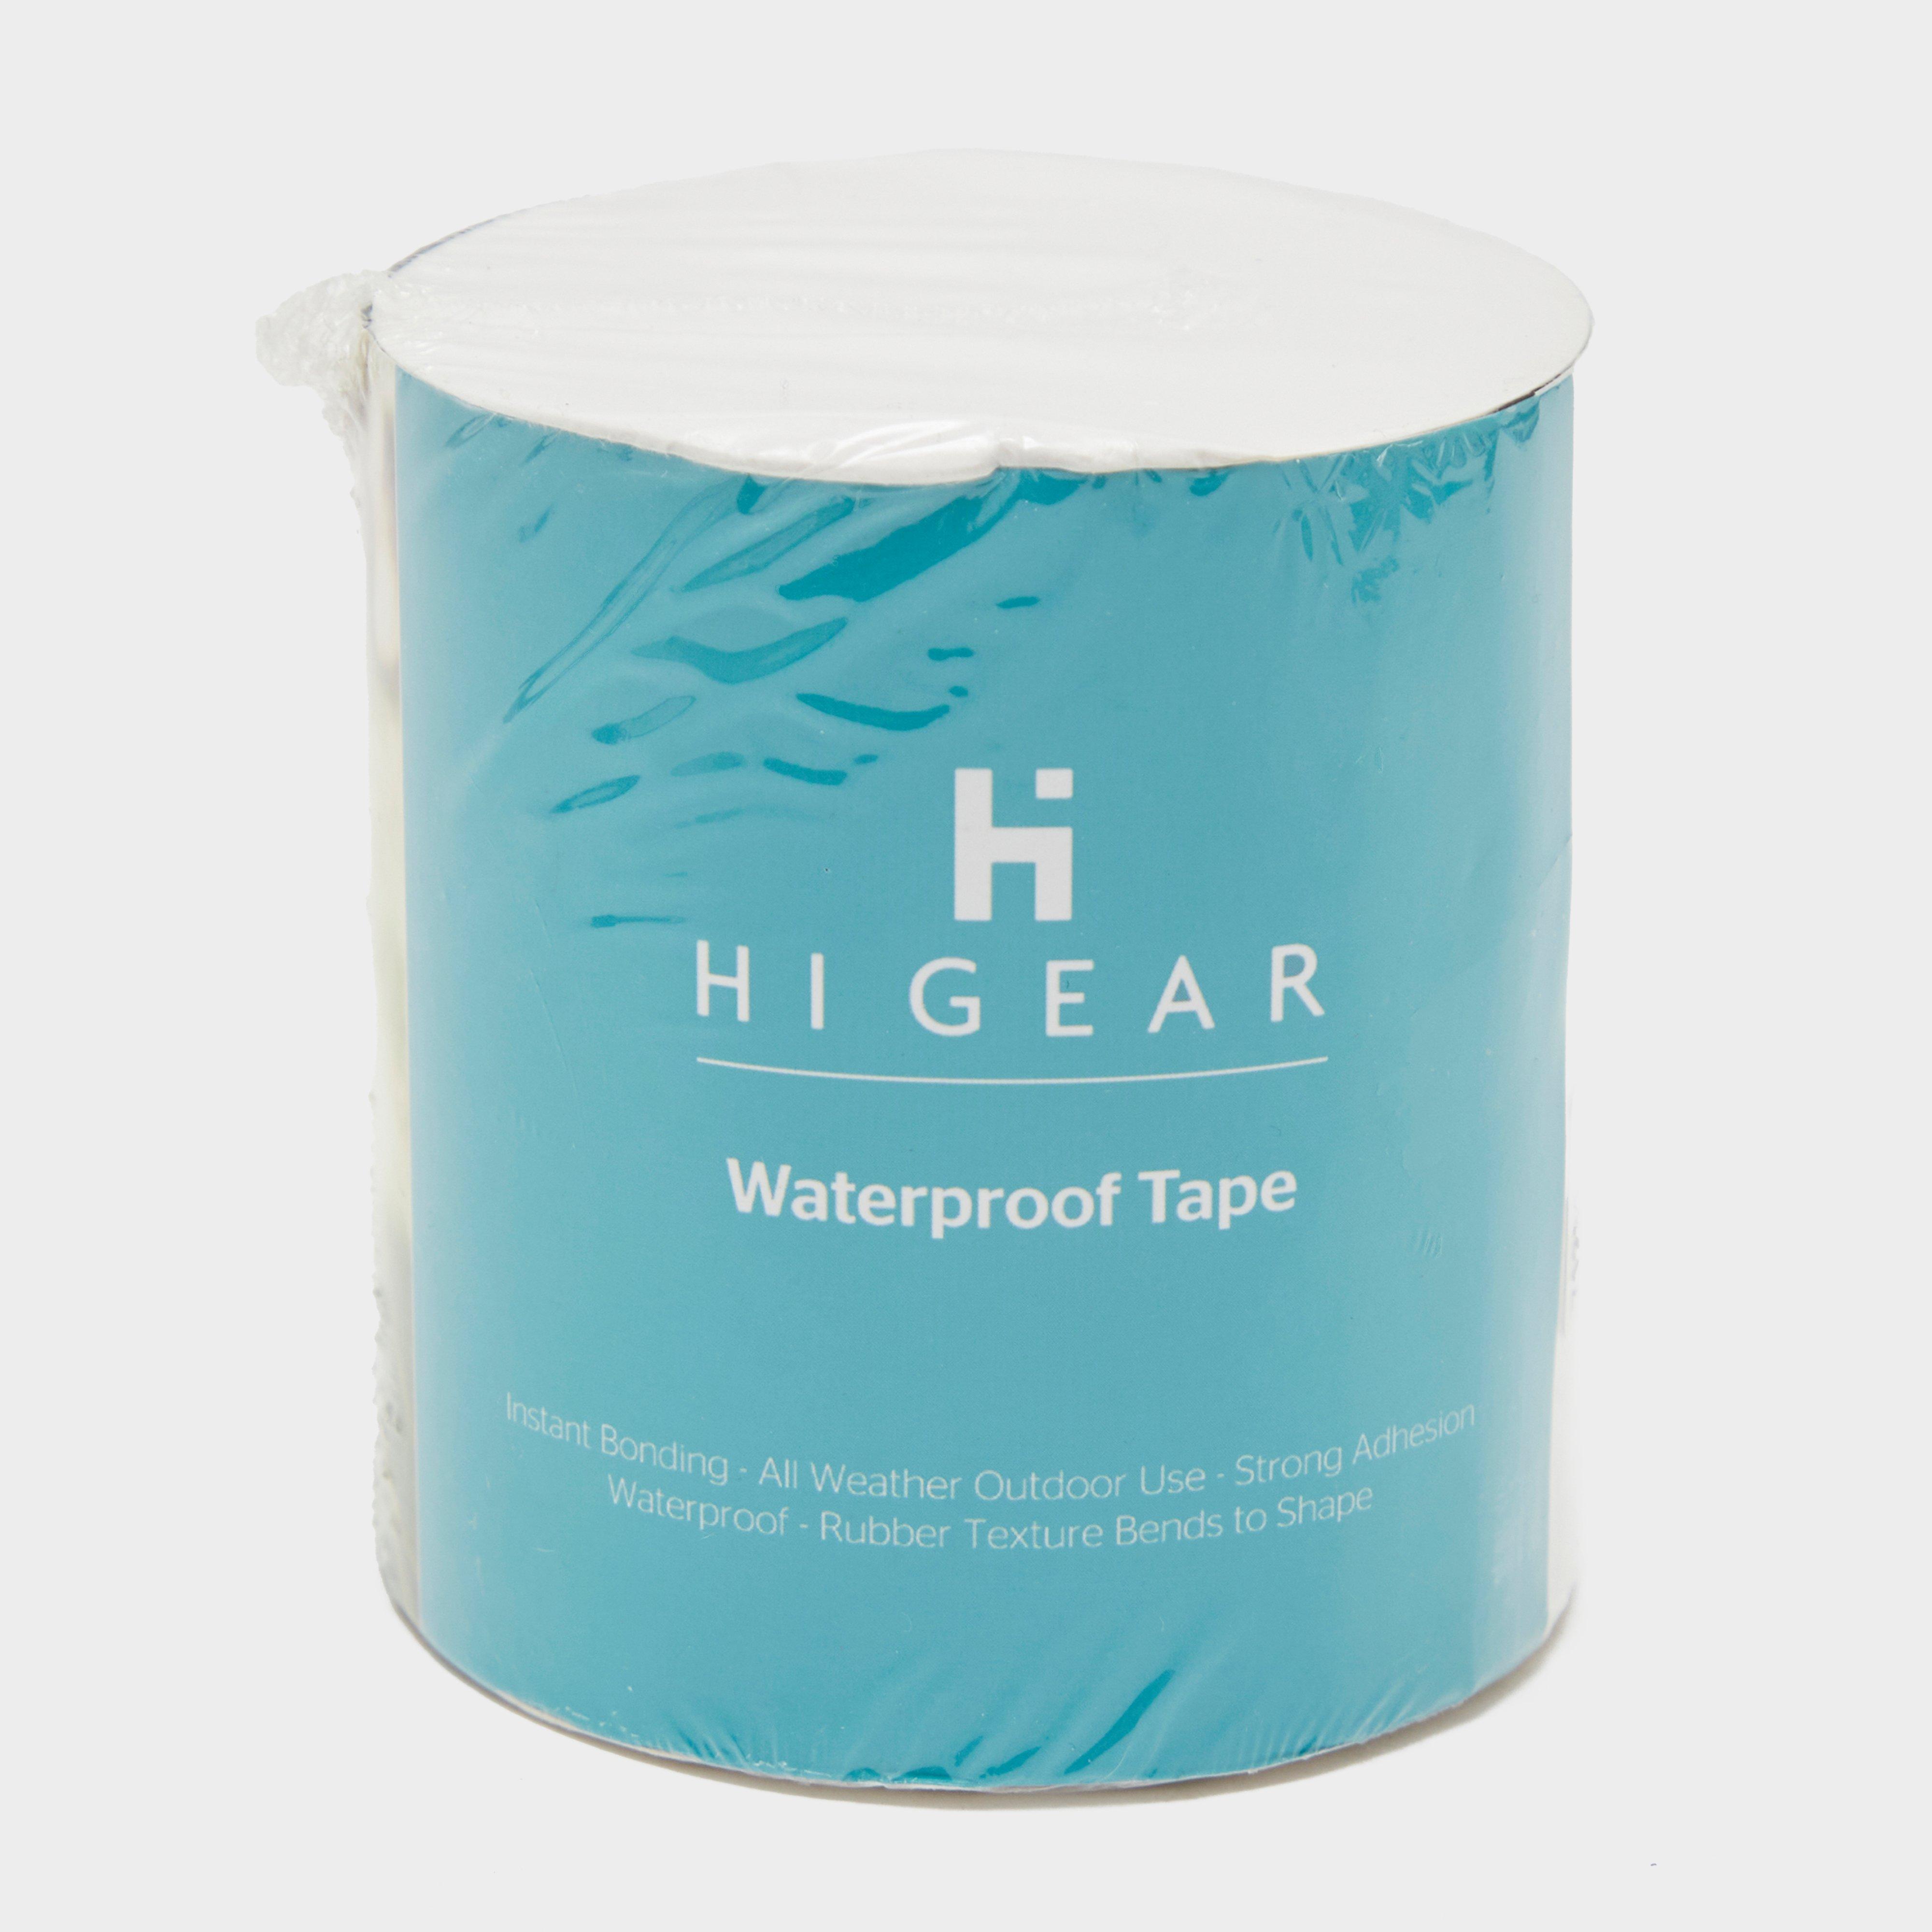 Hi-gear Waterproof Tape  Black